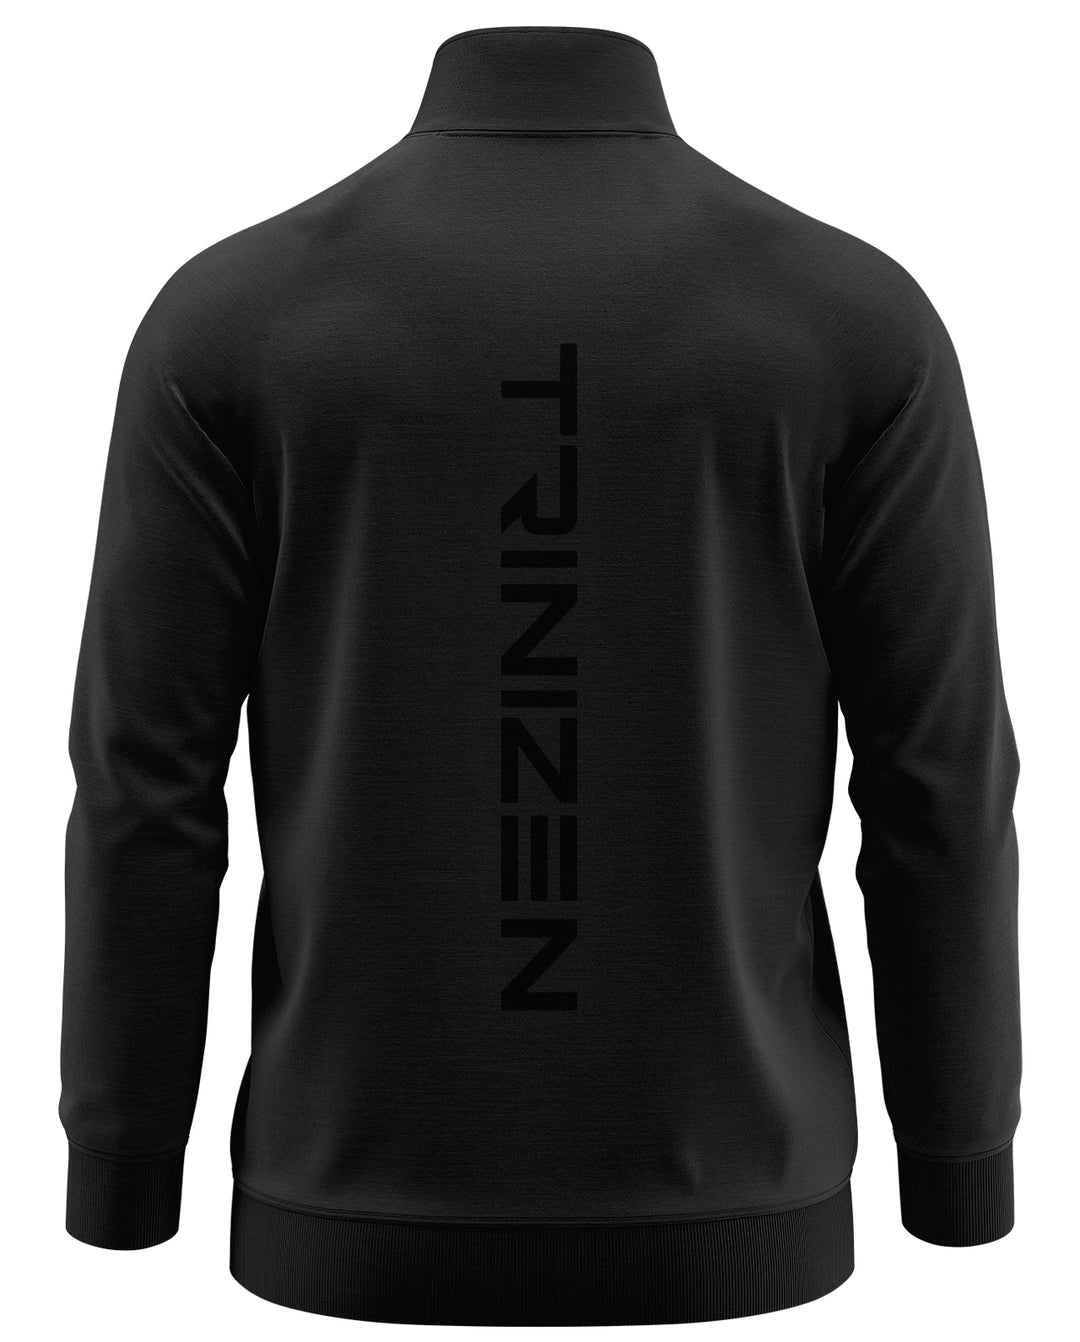 Trinizen Original Cotton Track Jacket - Front and Back Black Logo